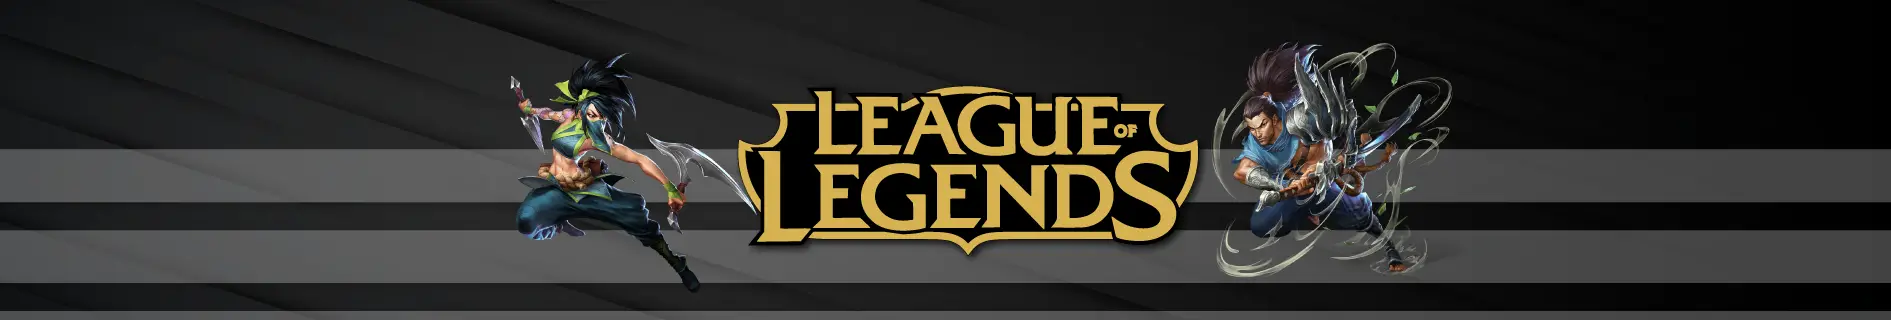 etiqueta escolar league of legends 7